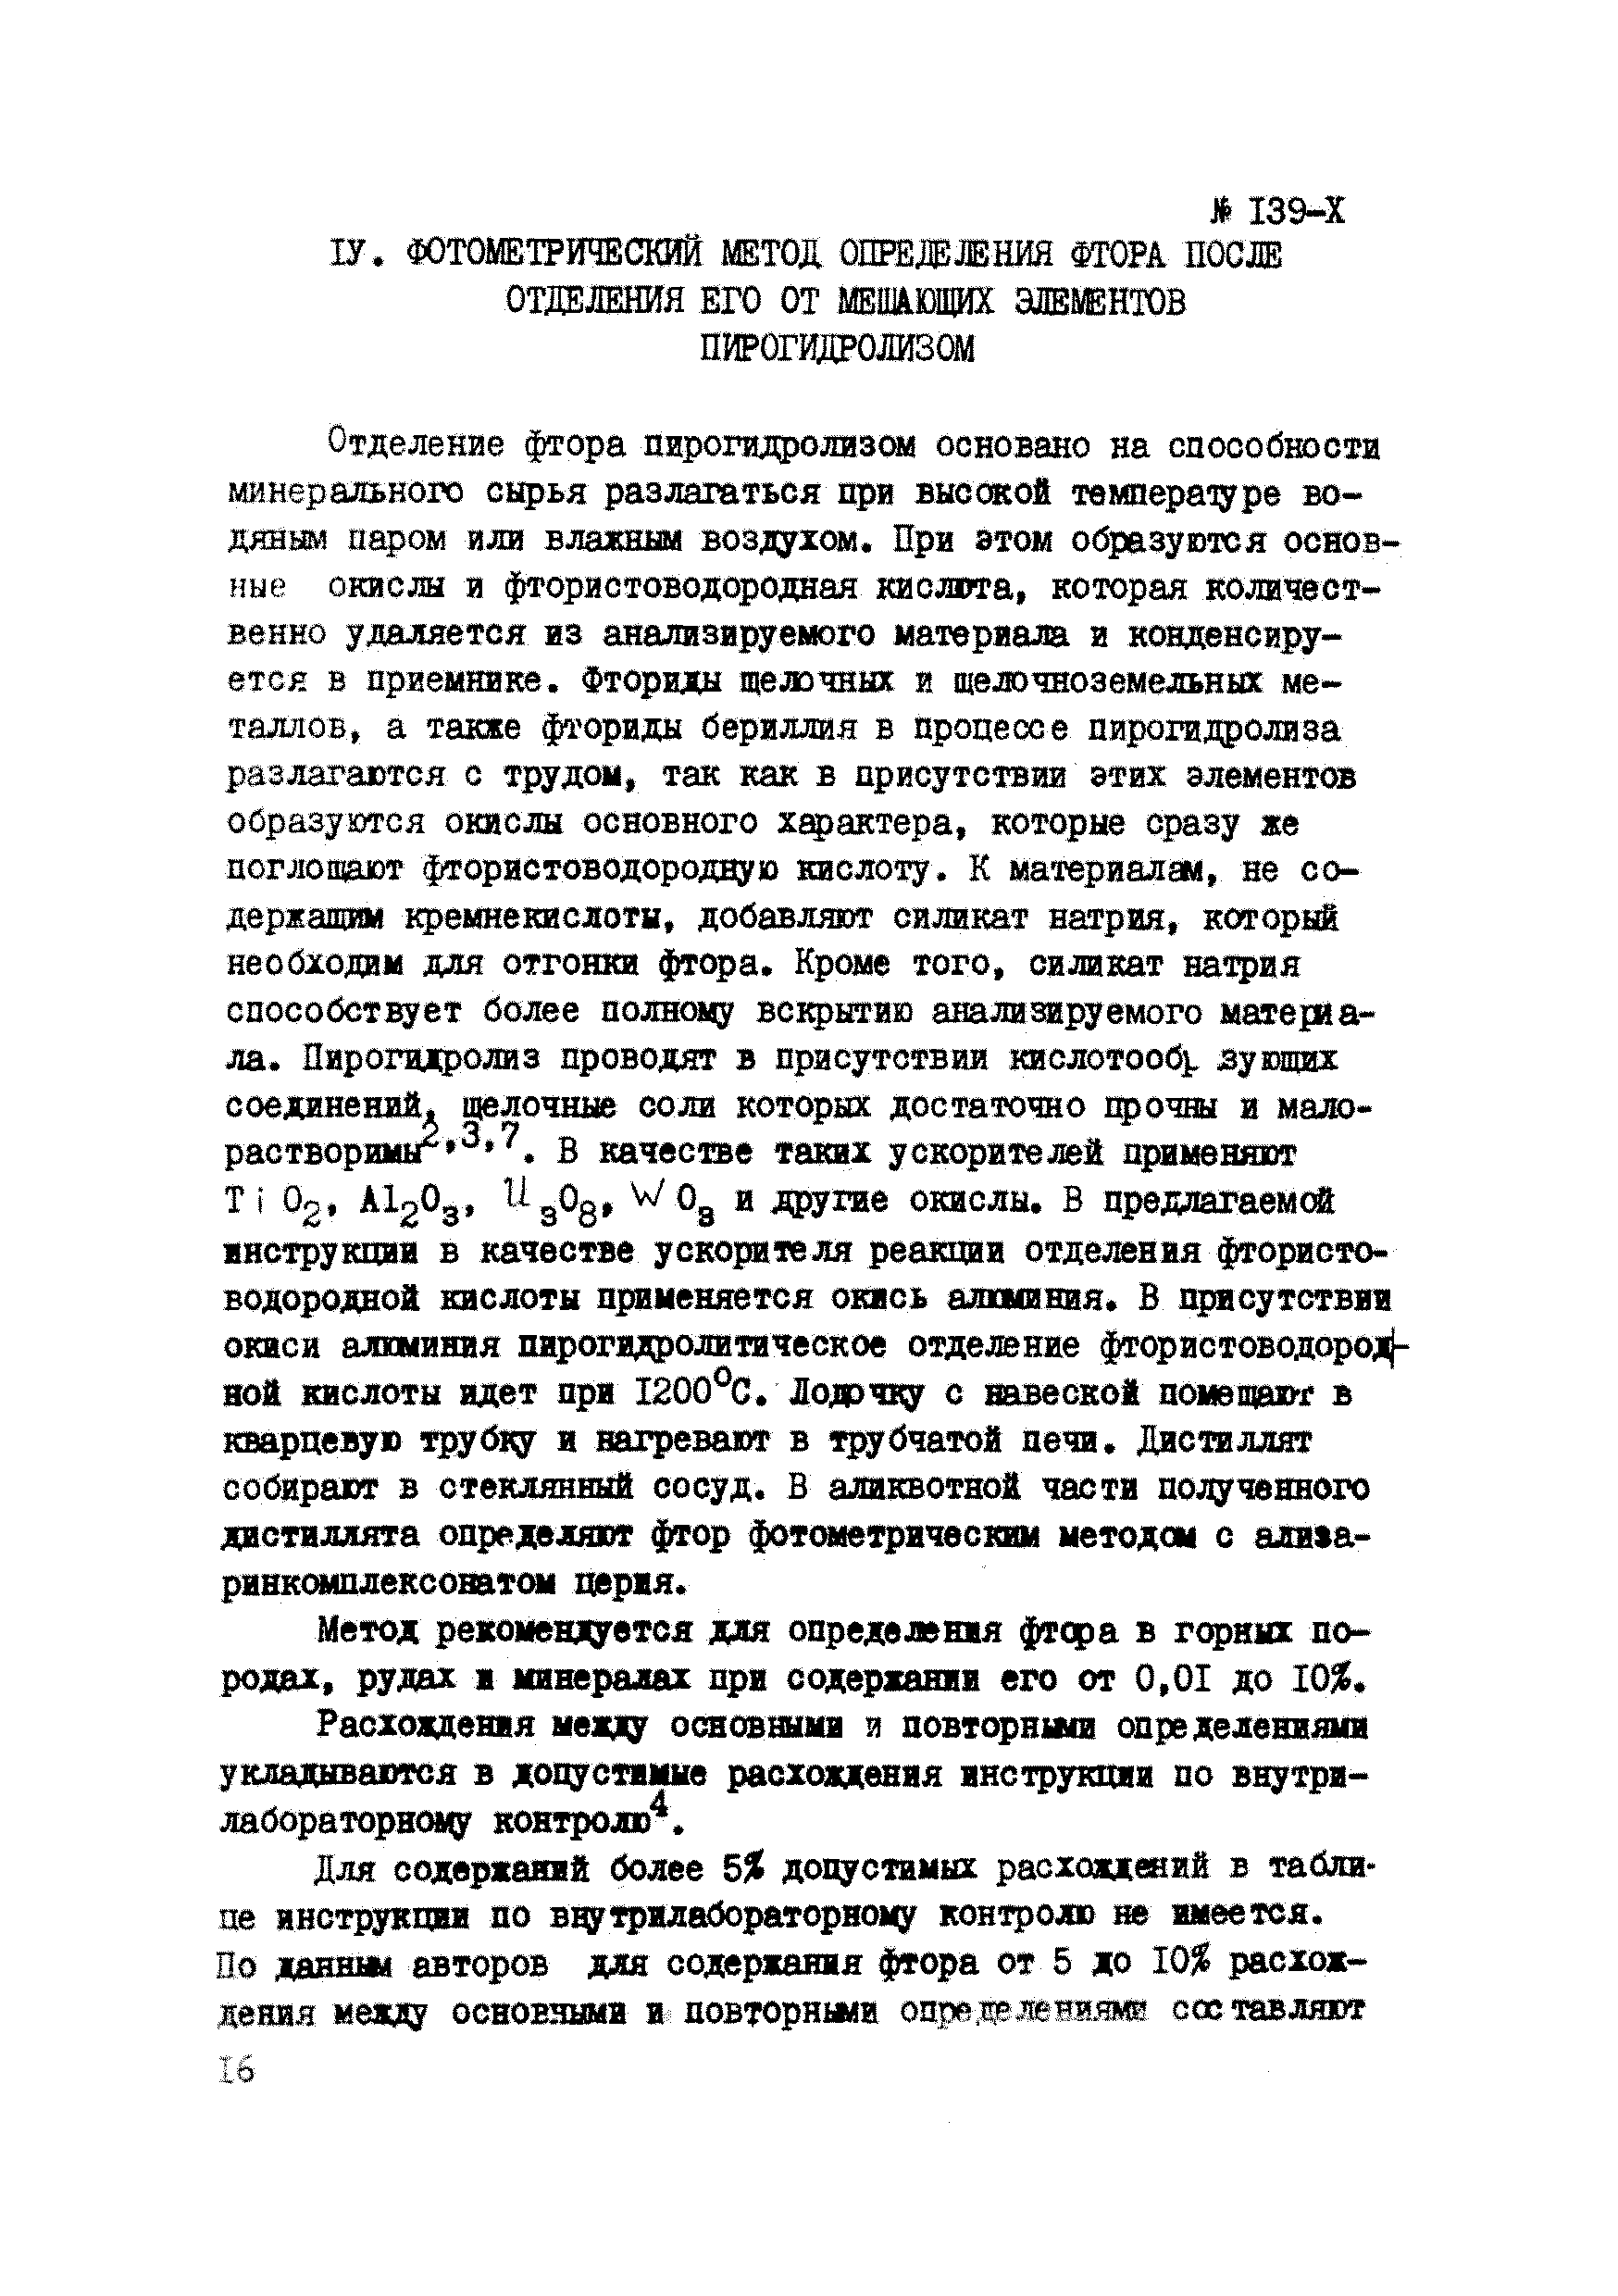 Инструкция НСАМ 139-Х